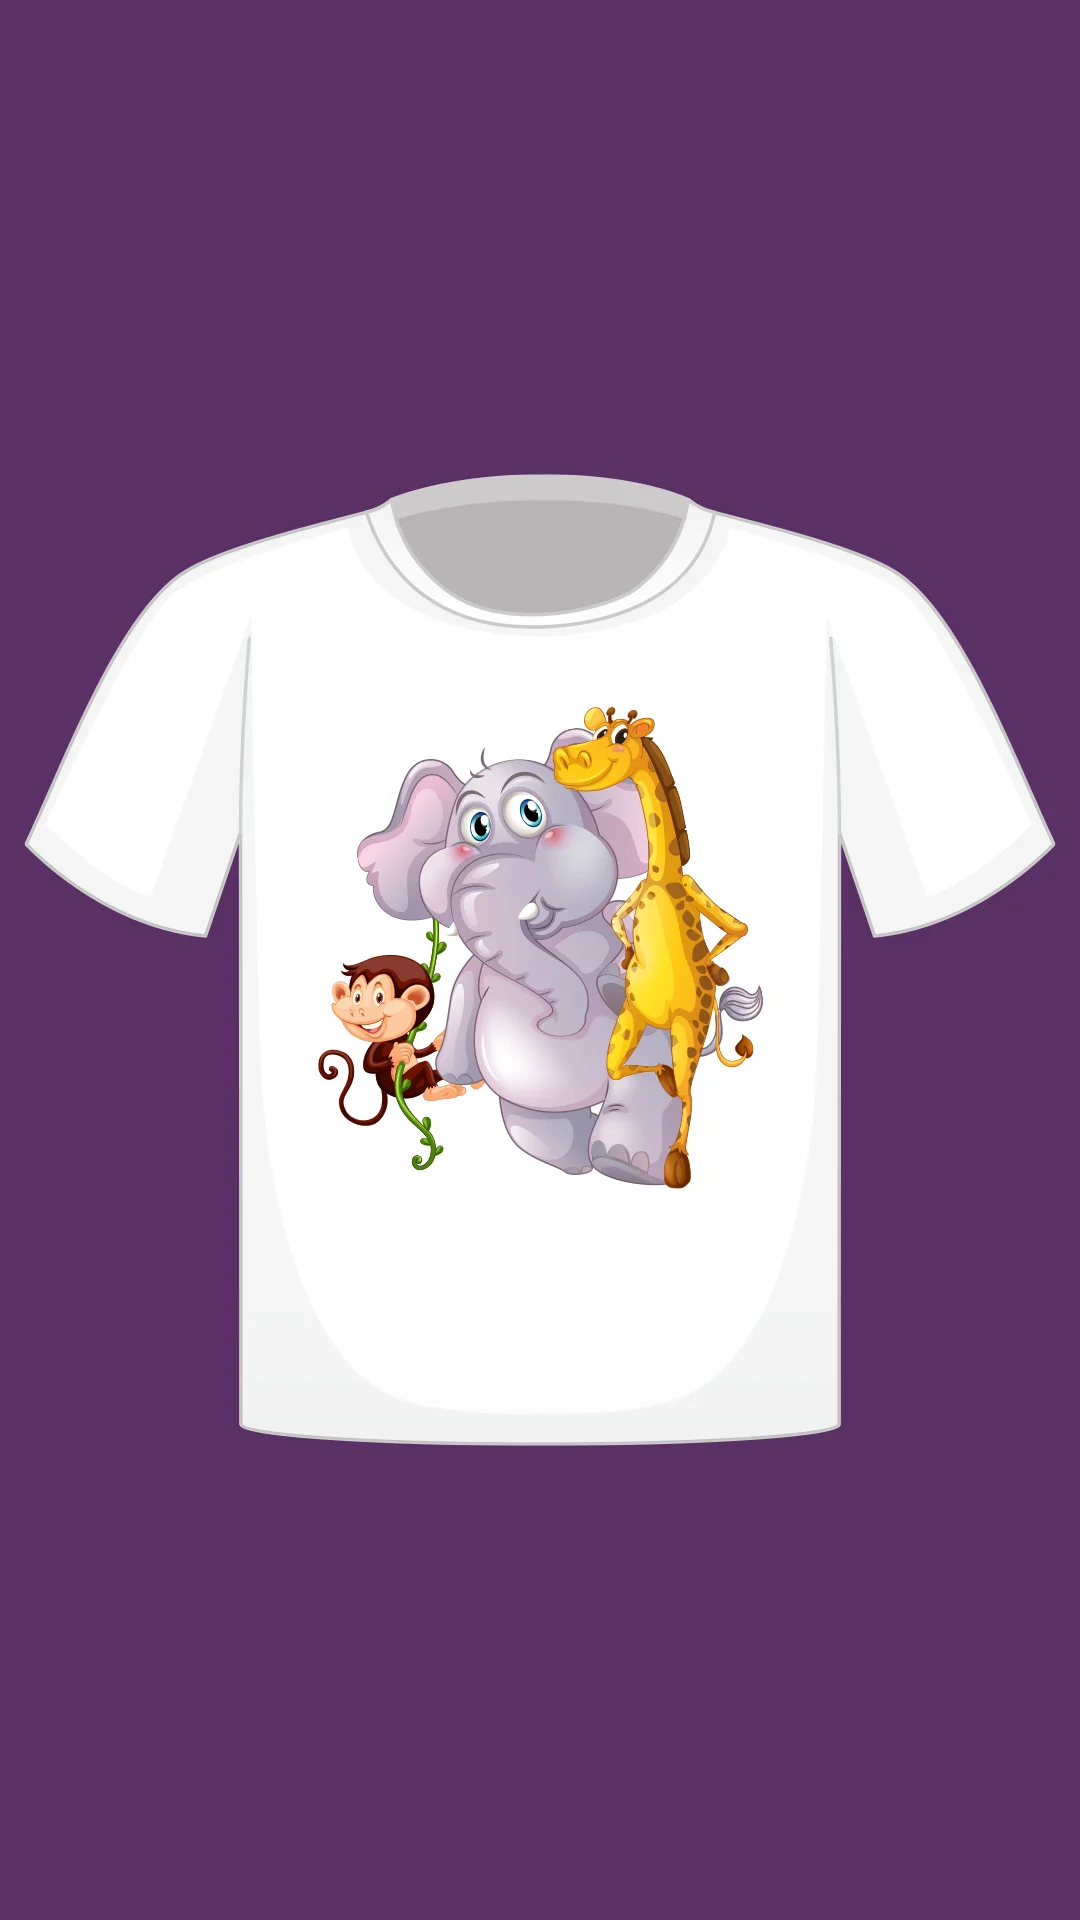 Free psd cartoon animals templates for unique t shirt designs in digitalposh.co.in